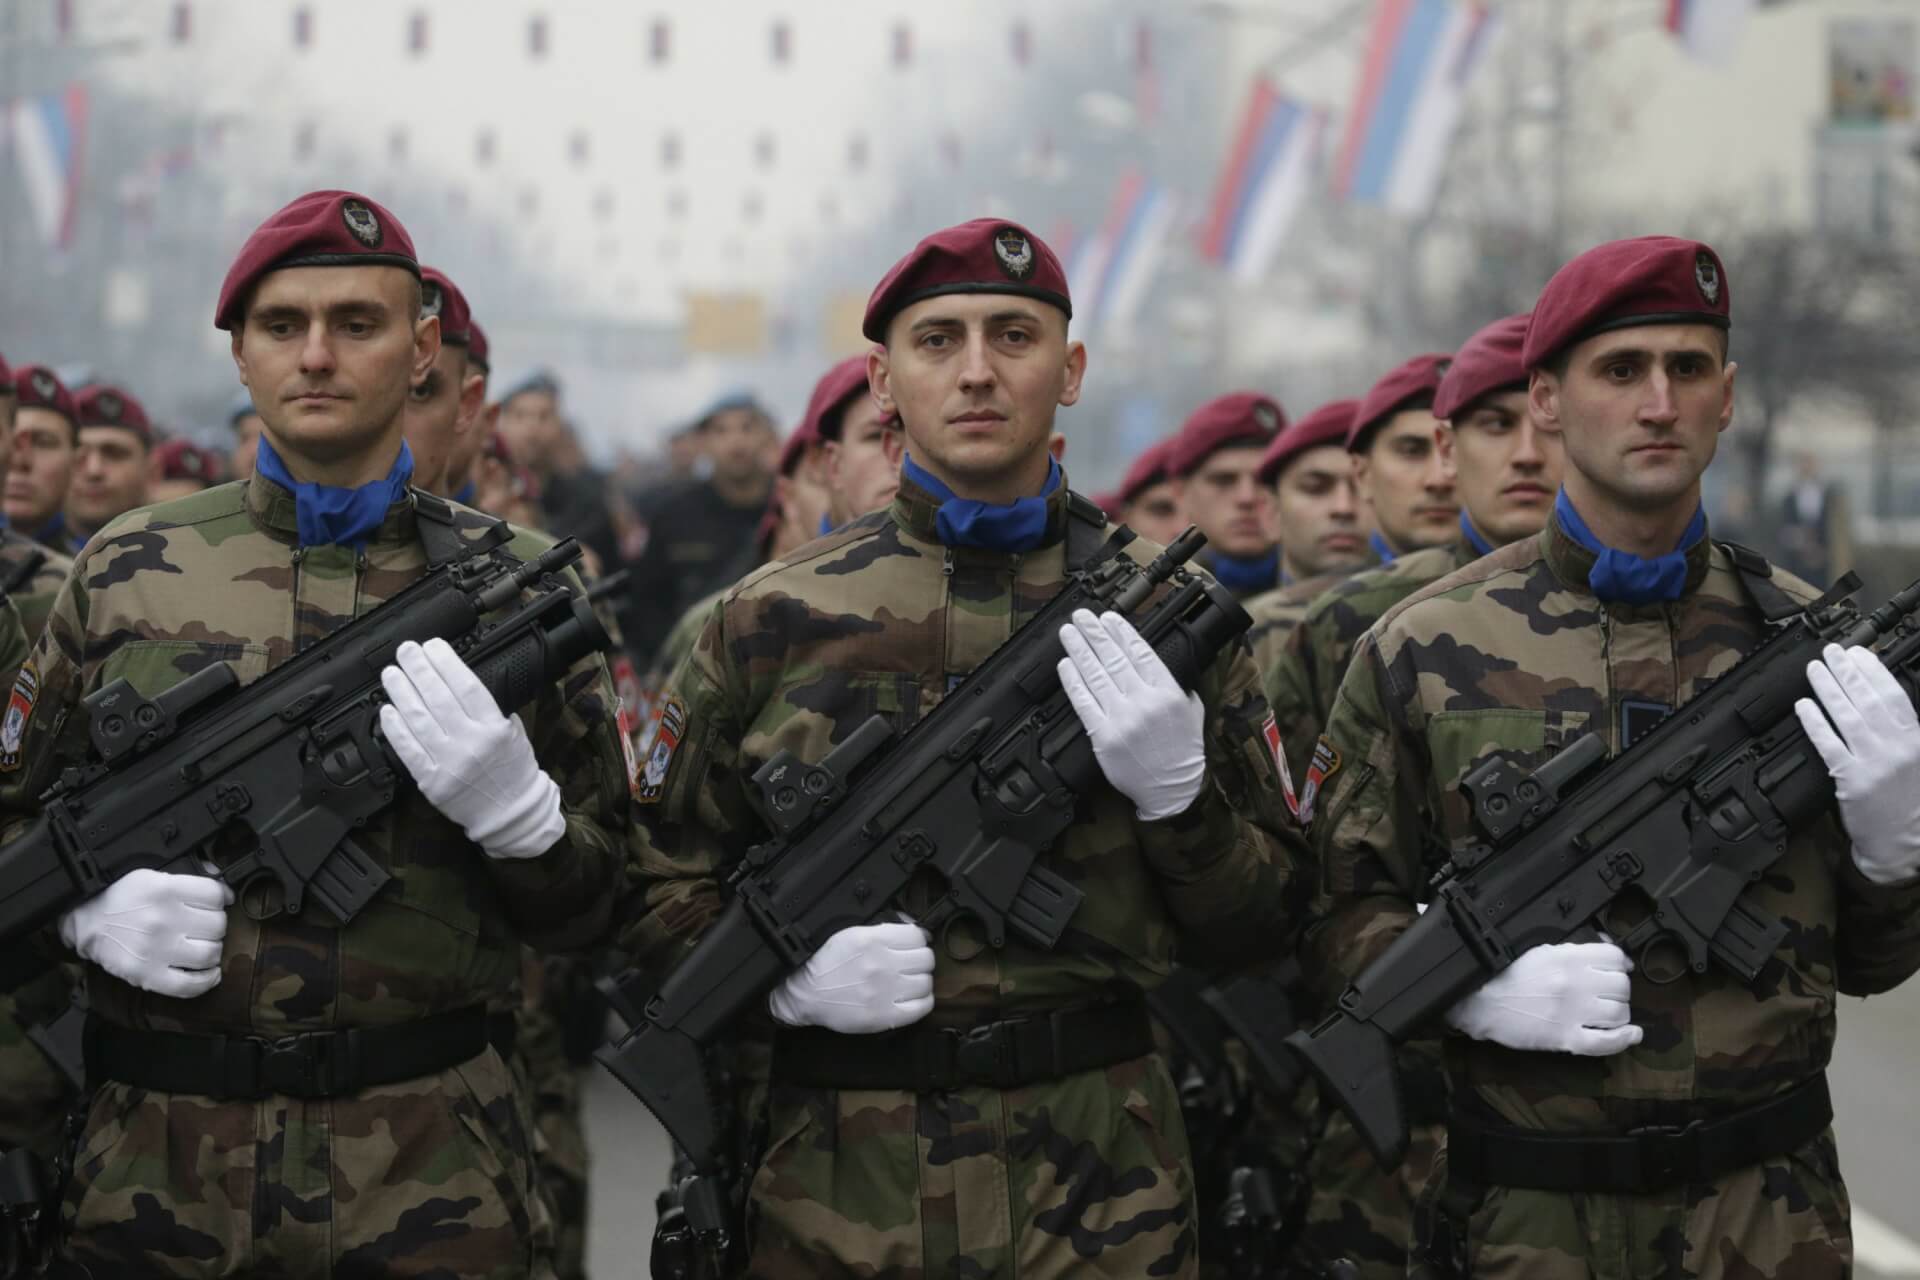 Bosnian Serbs Seek to Secede From Bosnia-Herzegovina Amid Worst Crisis Since 1995